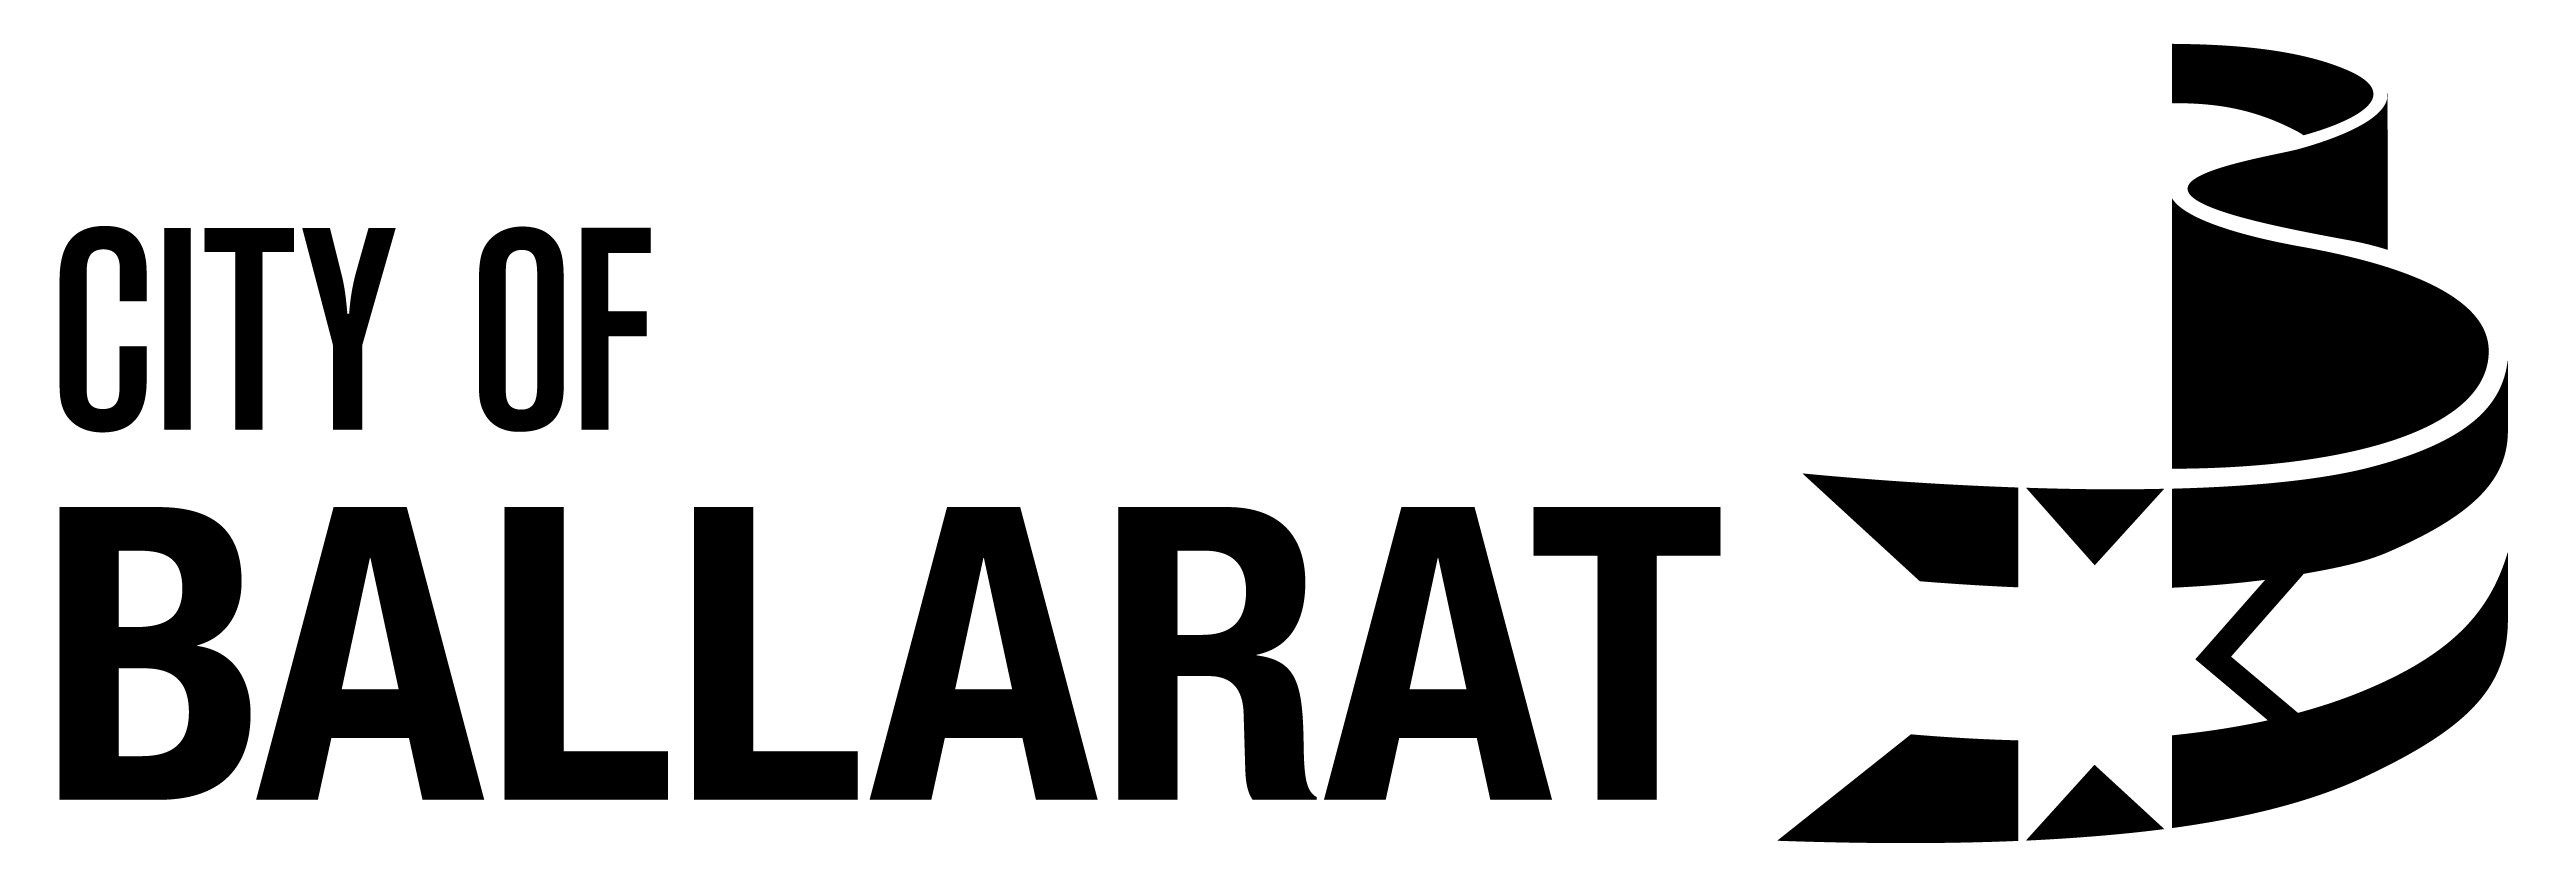 City of Ballarat logo over a transparent background